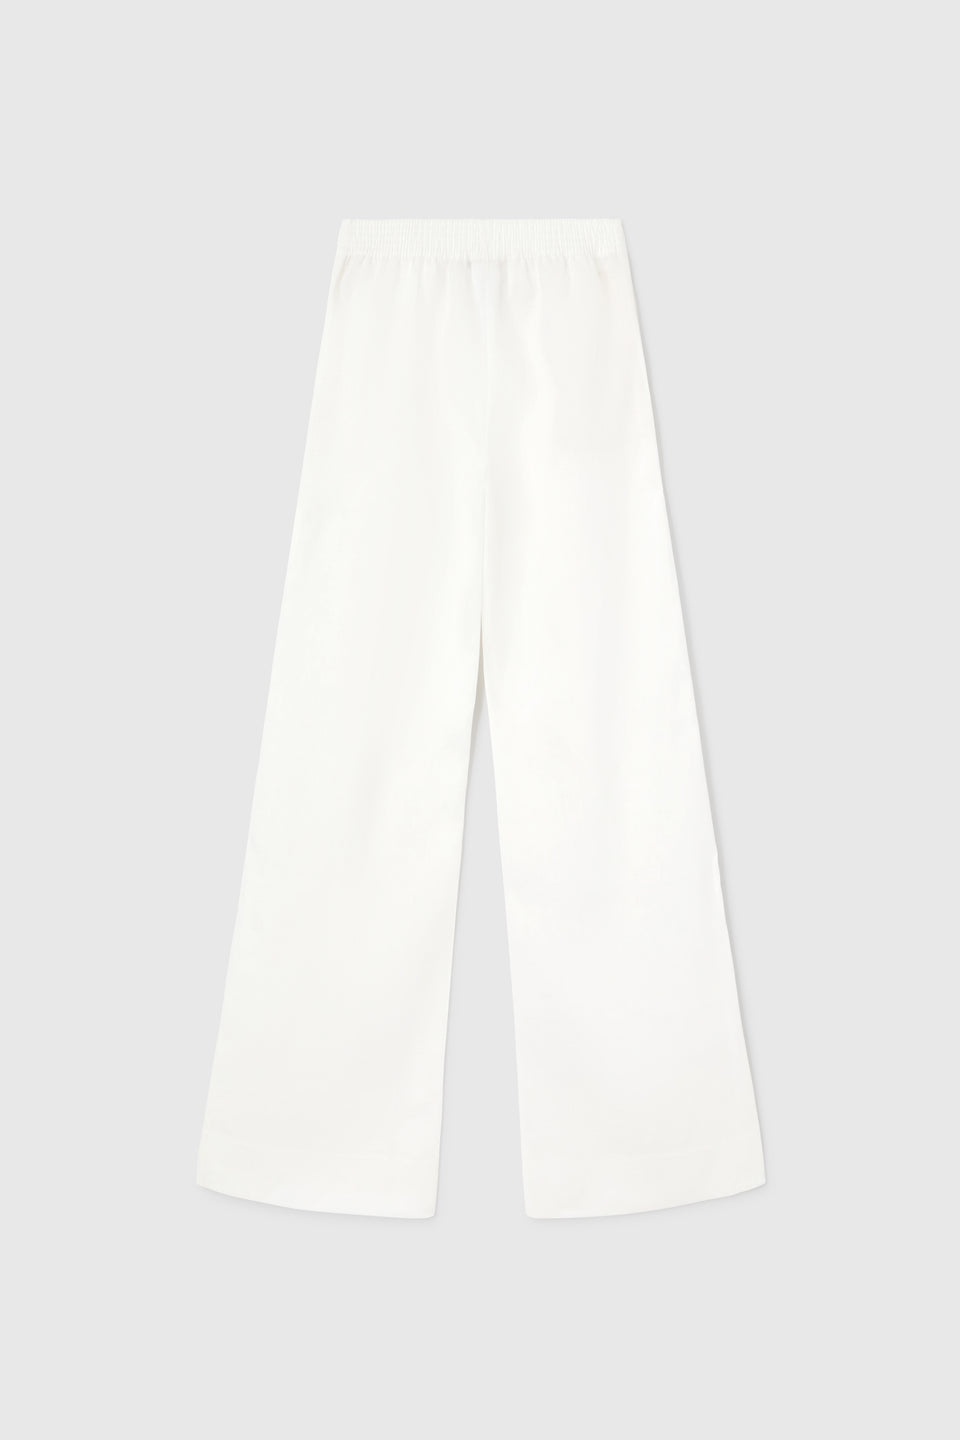 White linen trousers